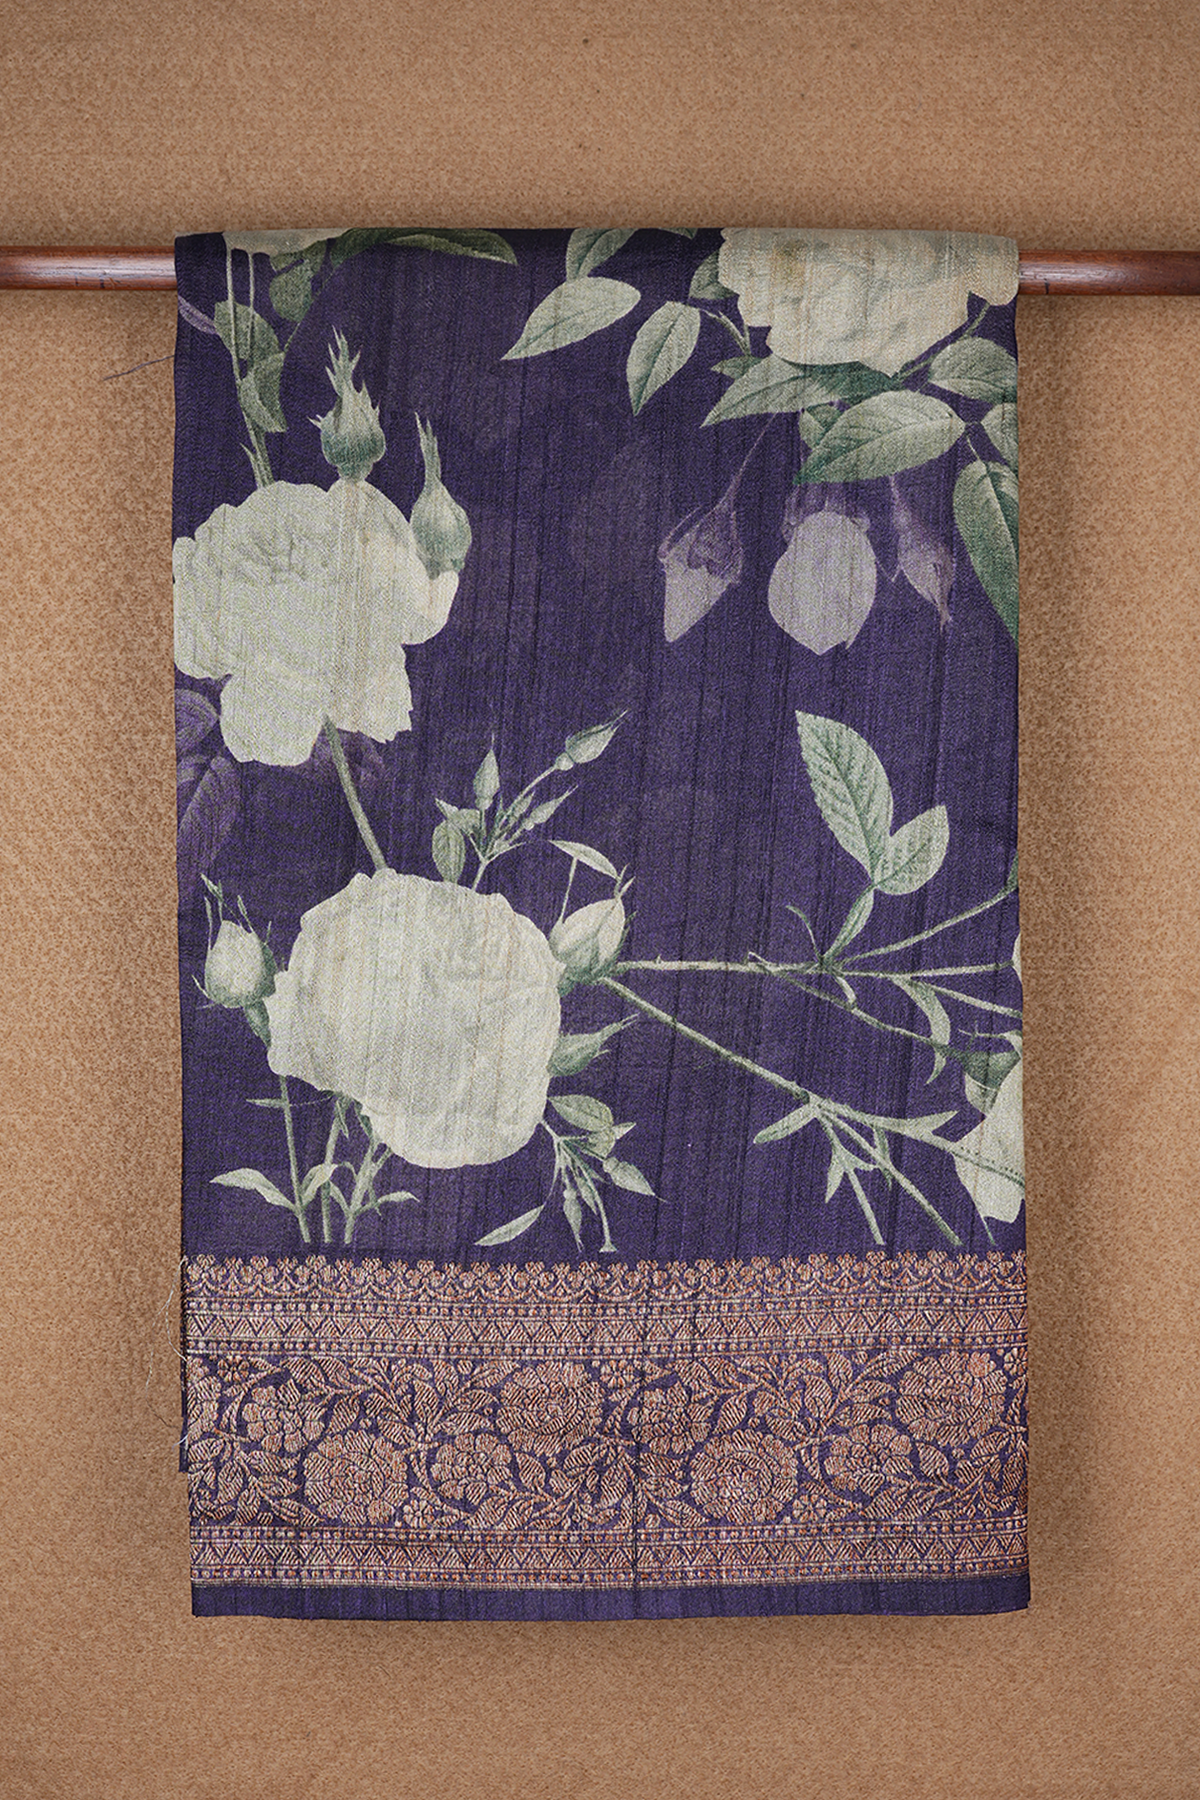 Floral Printed Regal Purple Tussar Banarasi Silk Saree